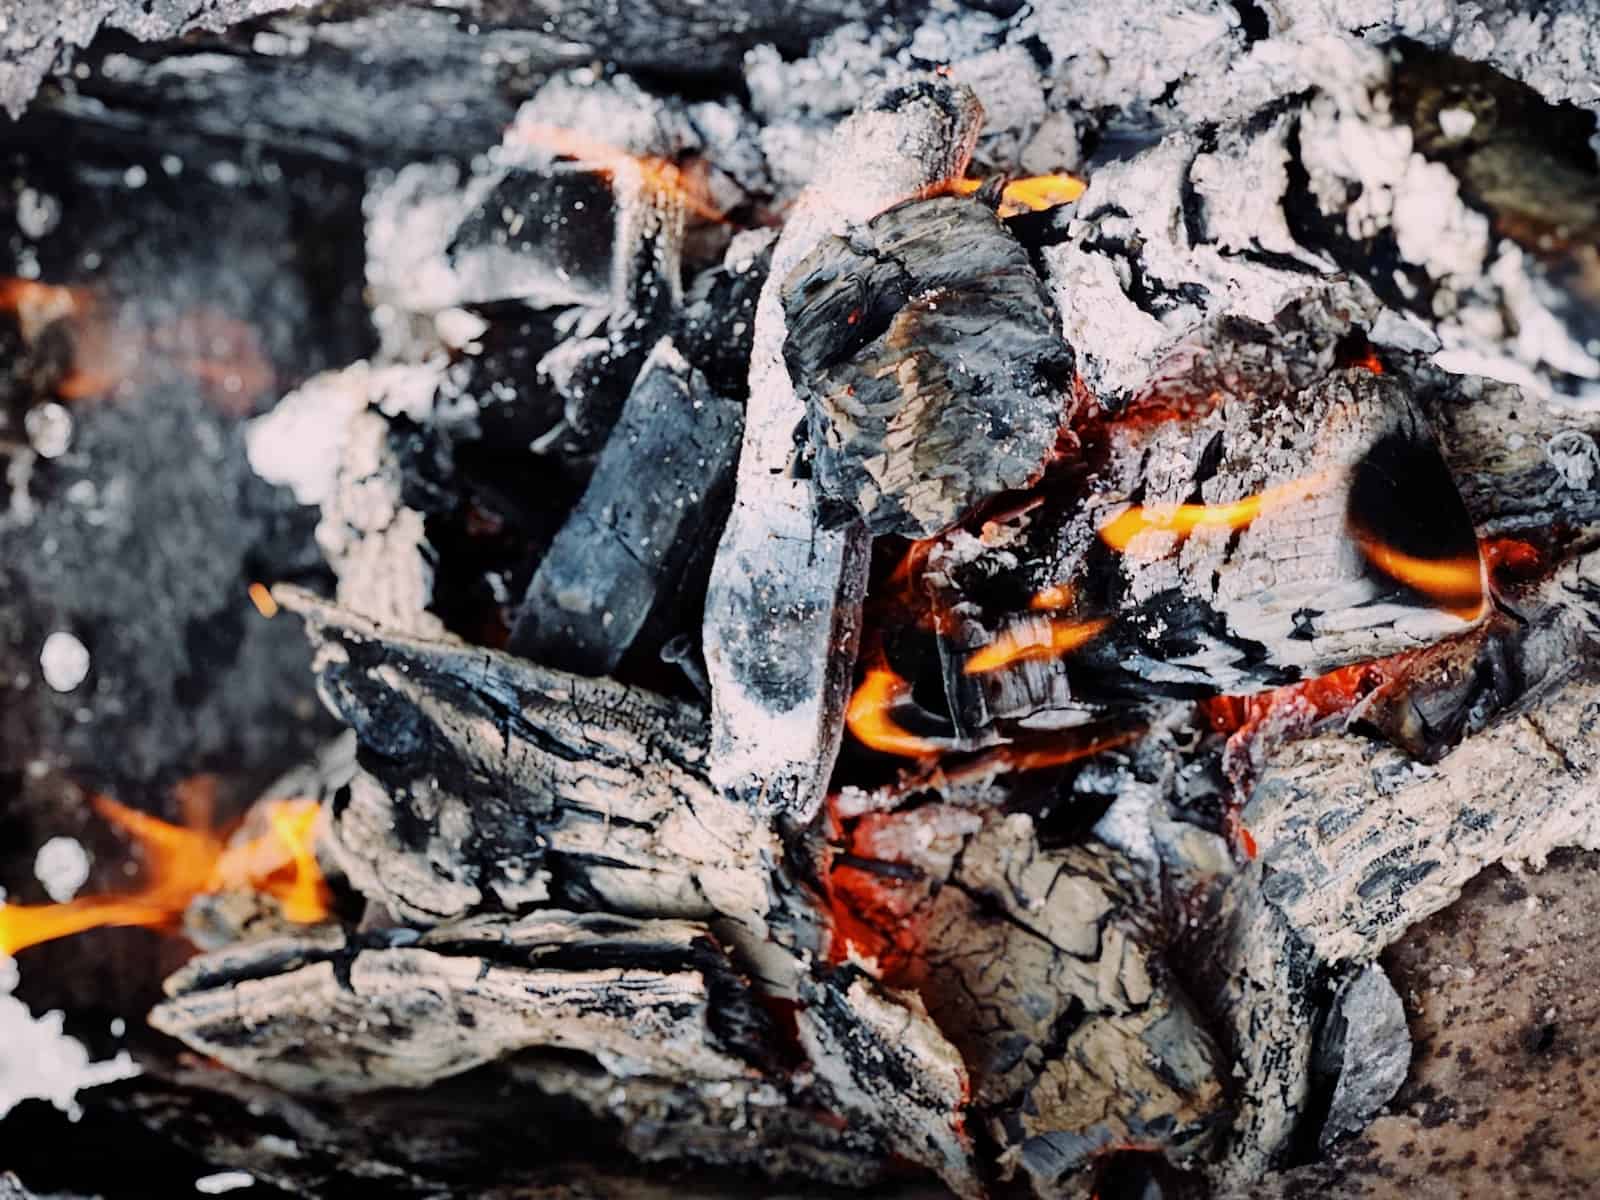 https://salamanderstoves.com/wp-content/uploads/2021/08/off-grid-living-how-to-make-homemade-charcoal-1.jpg